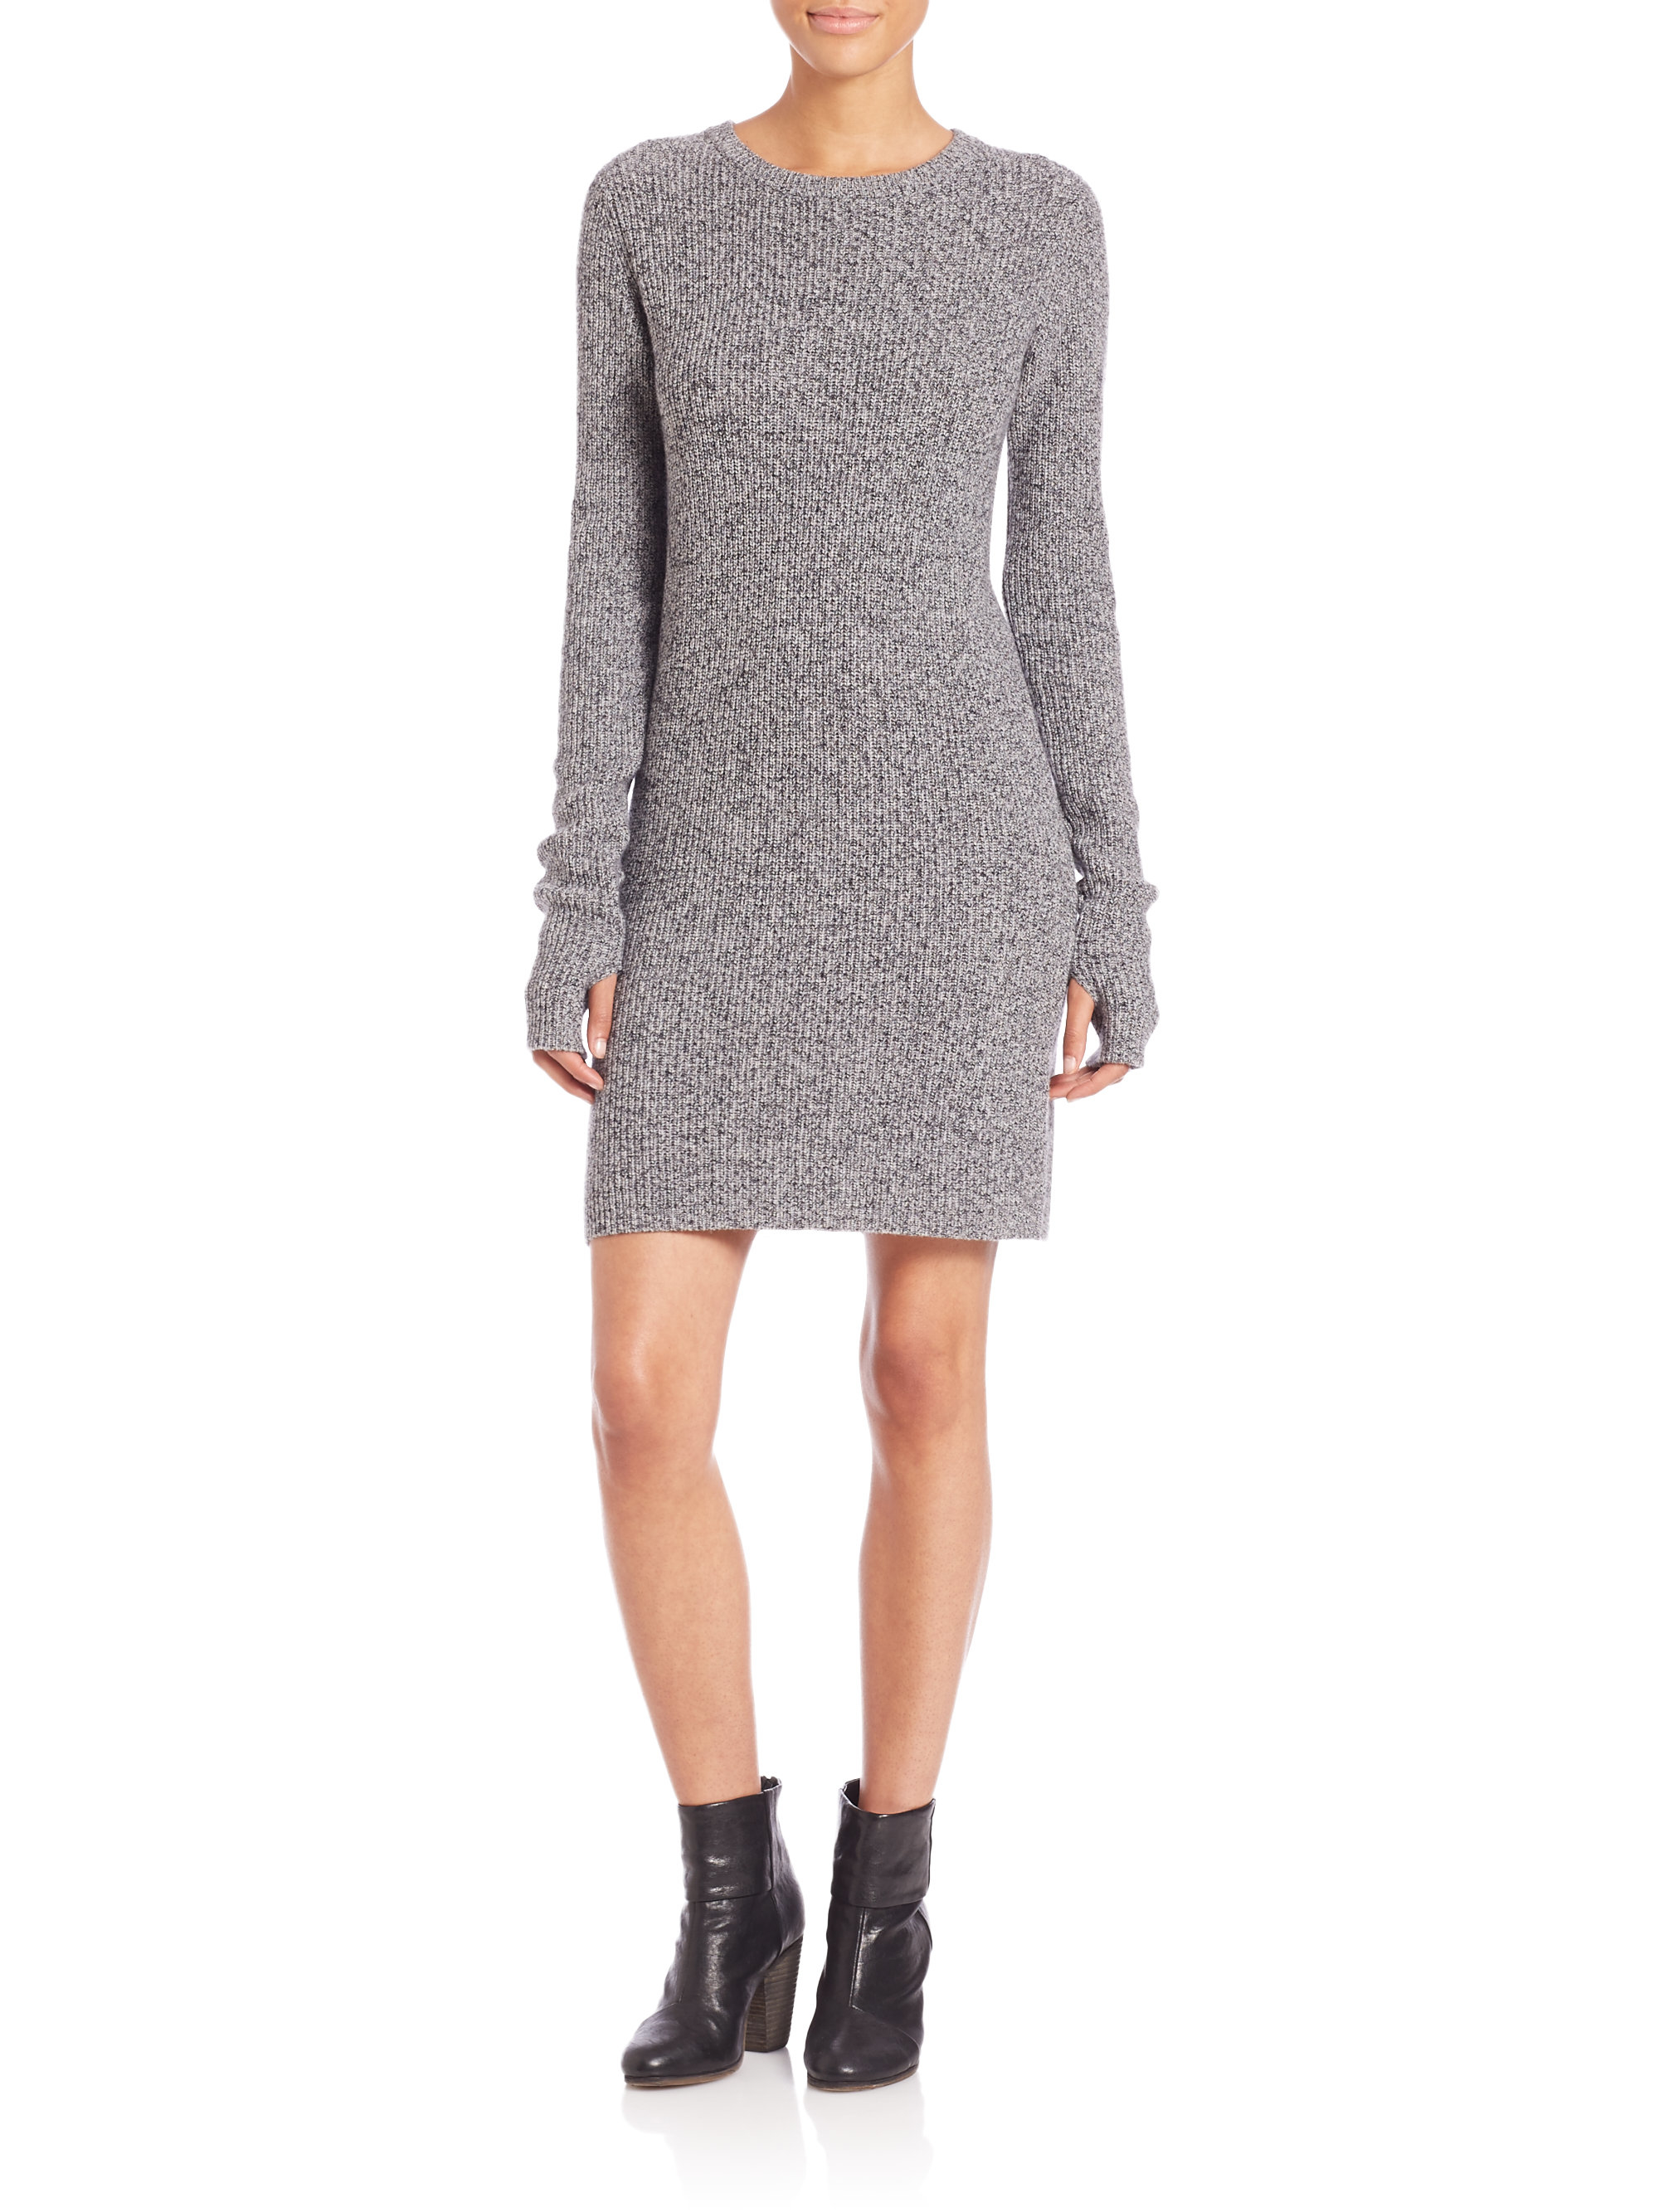 Lyst - Current/elliott Easy Wool & Cashmere Sweater Dress in Gray